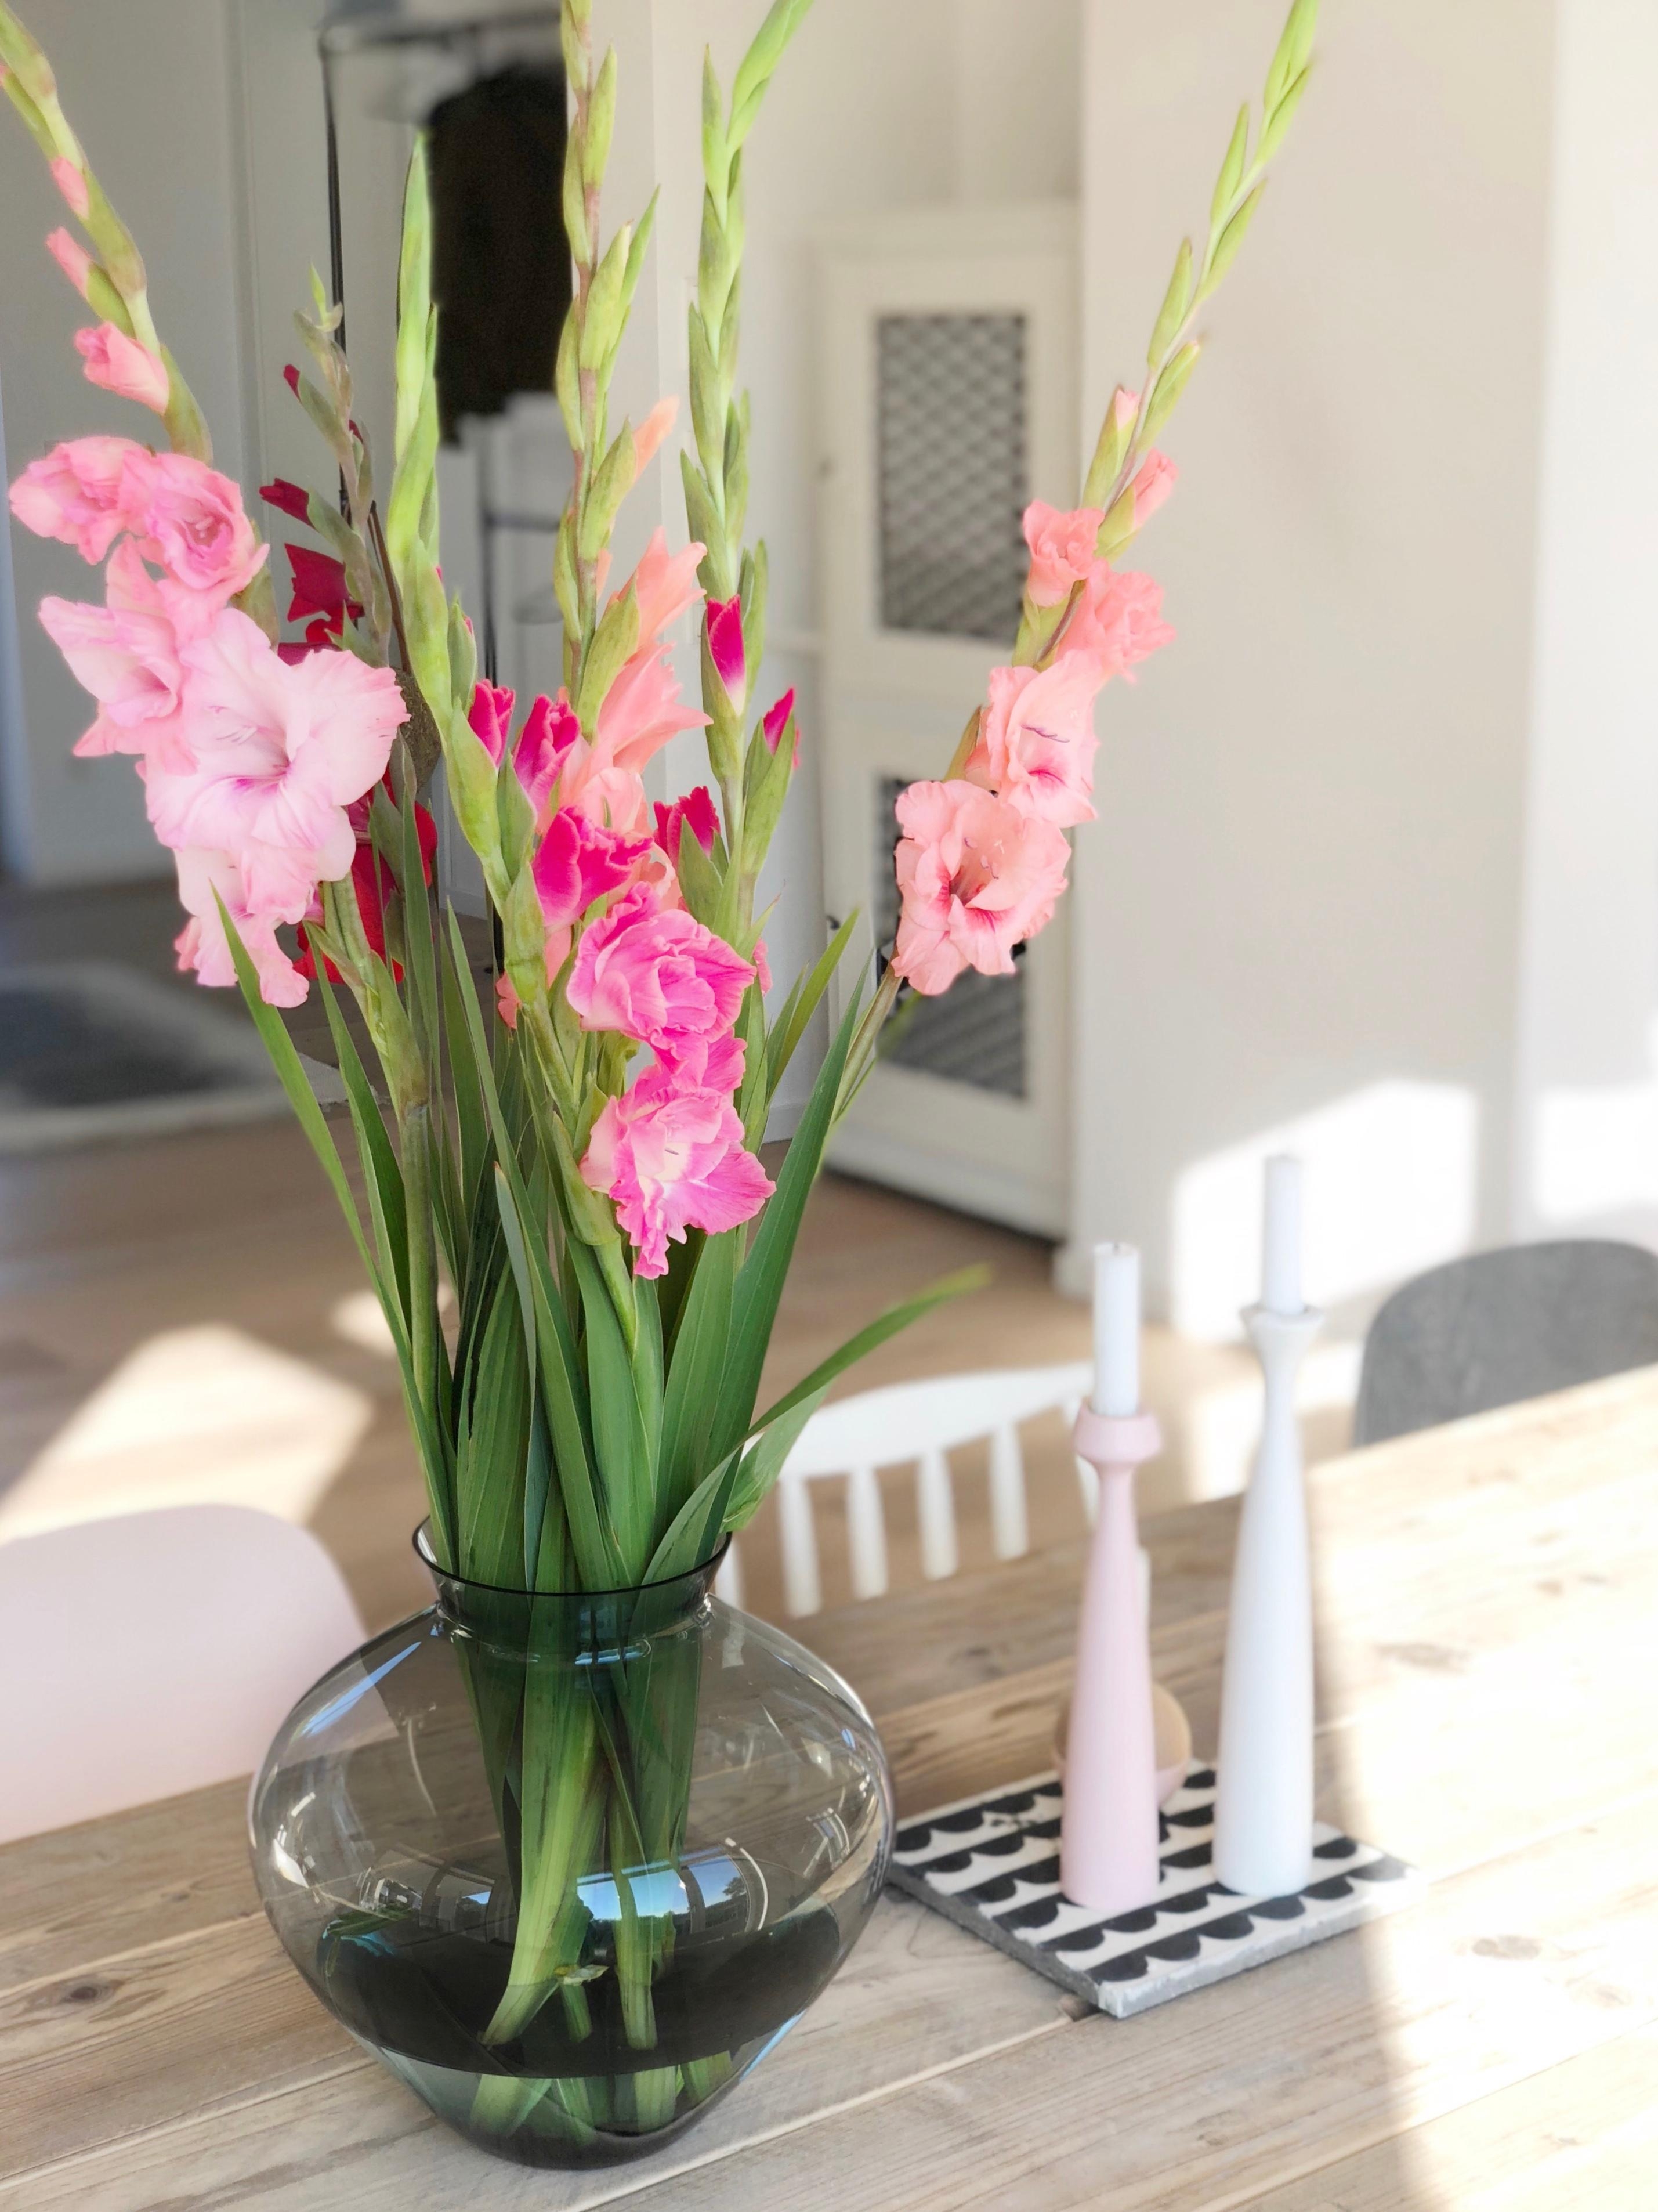 Sommer in der Vase
#summer#vase#gladiolen#whitehome#interiorlover